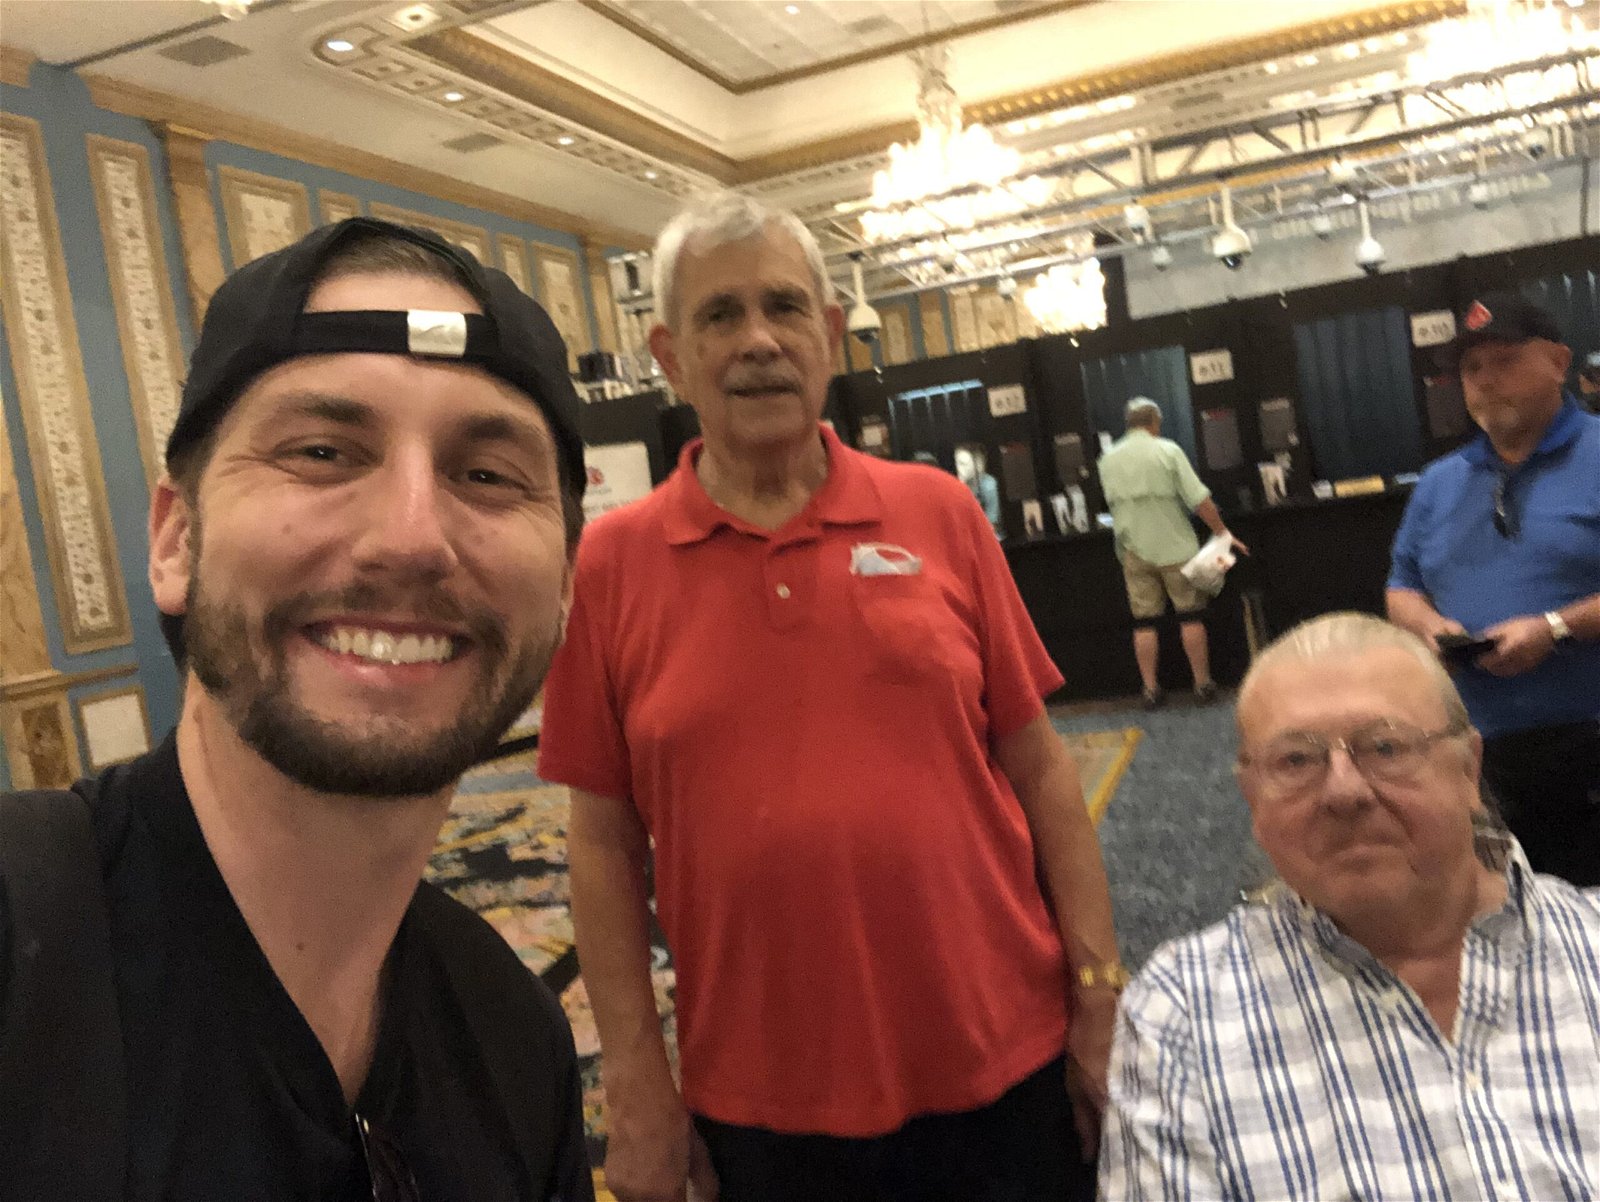 Meeting veterans of the poker game.